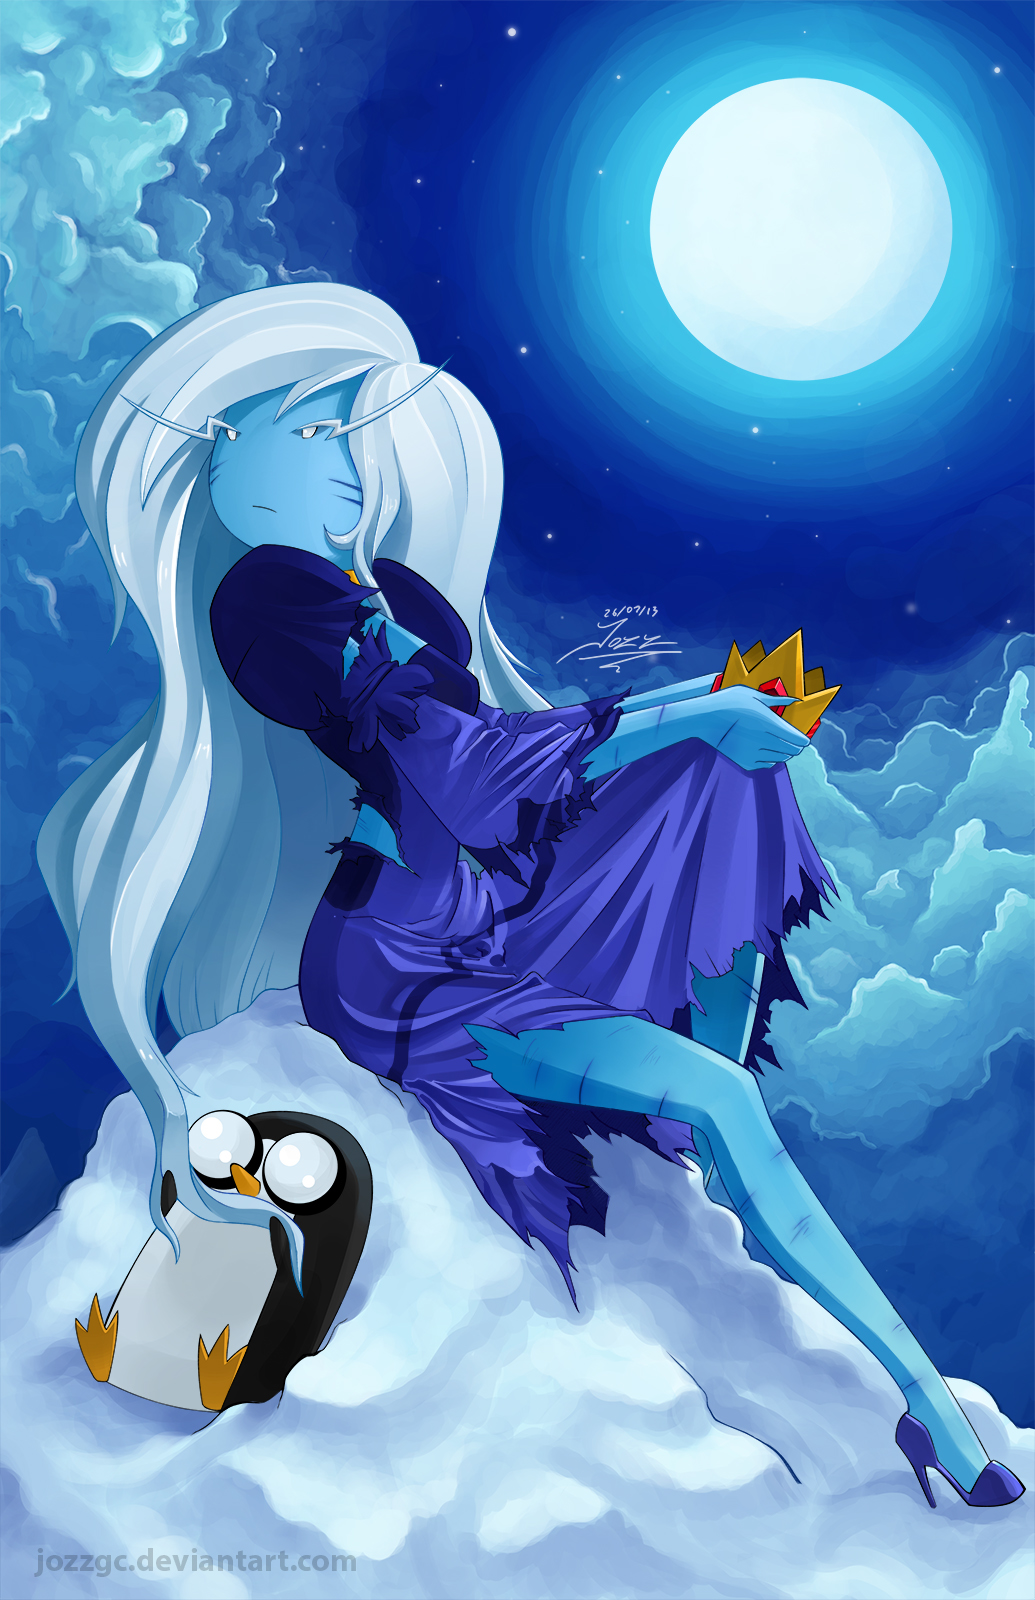 Ice queen Ice King gunter Adventure Time